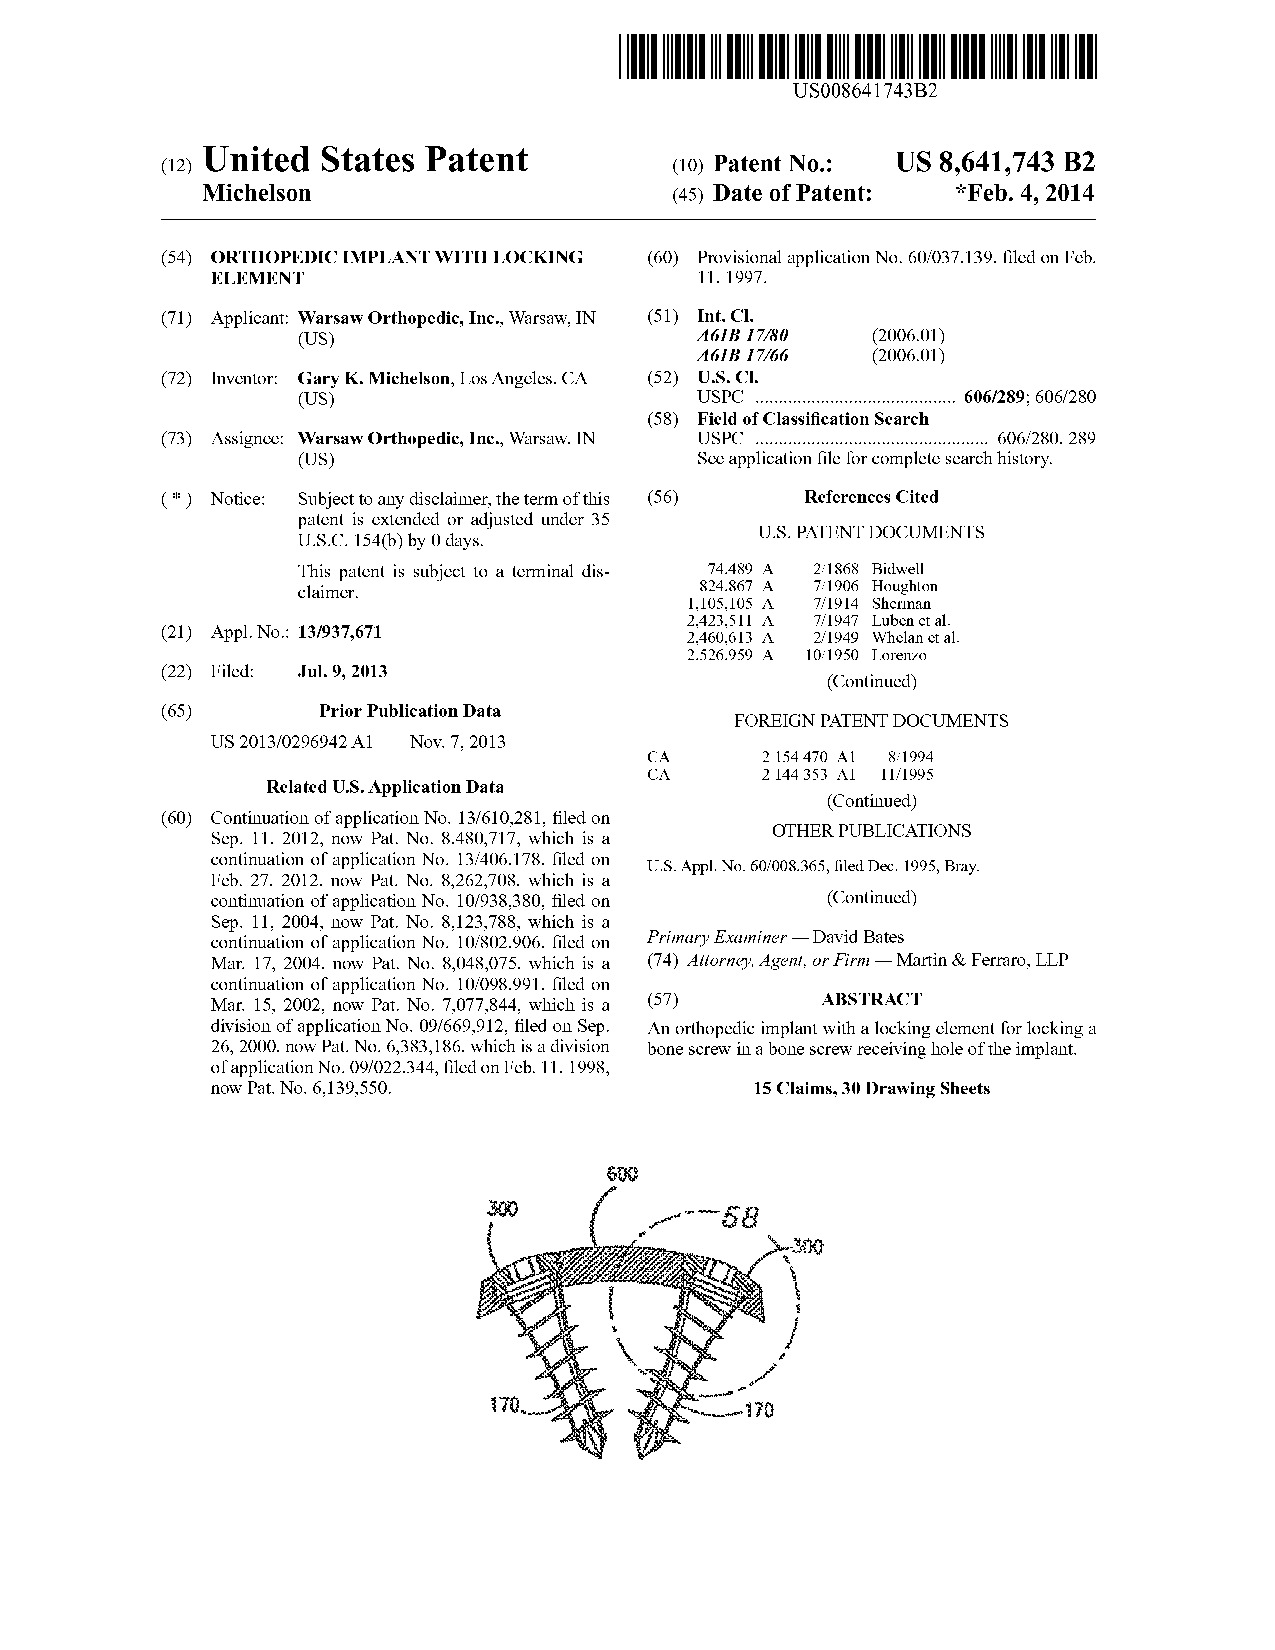 Orthopedic implant with locking element - Patent 8,641,743